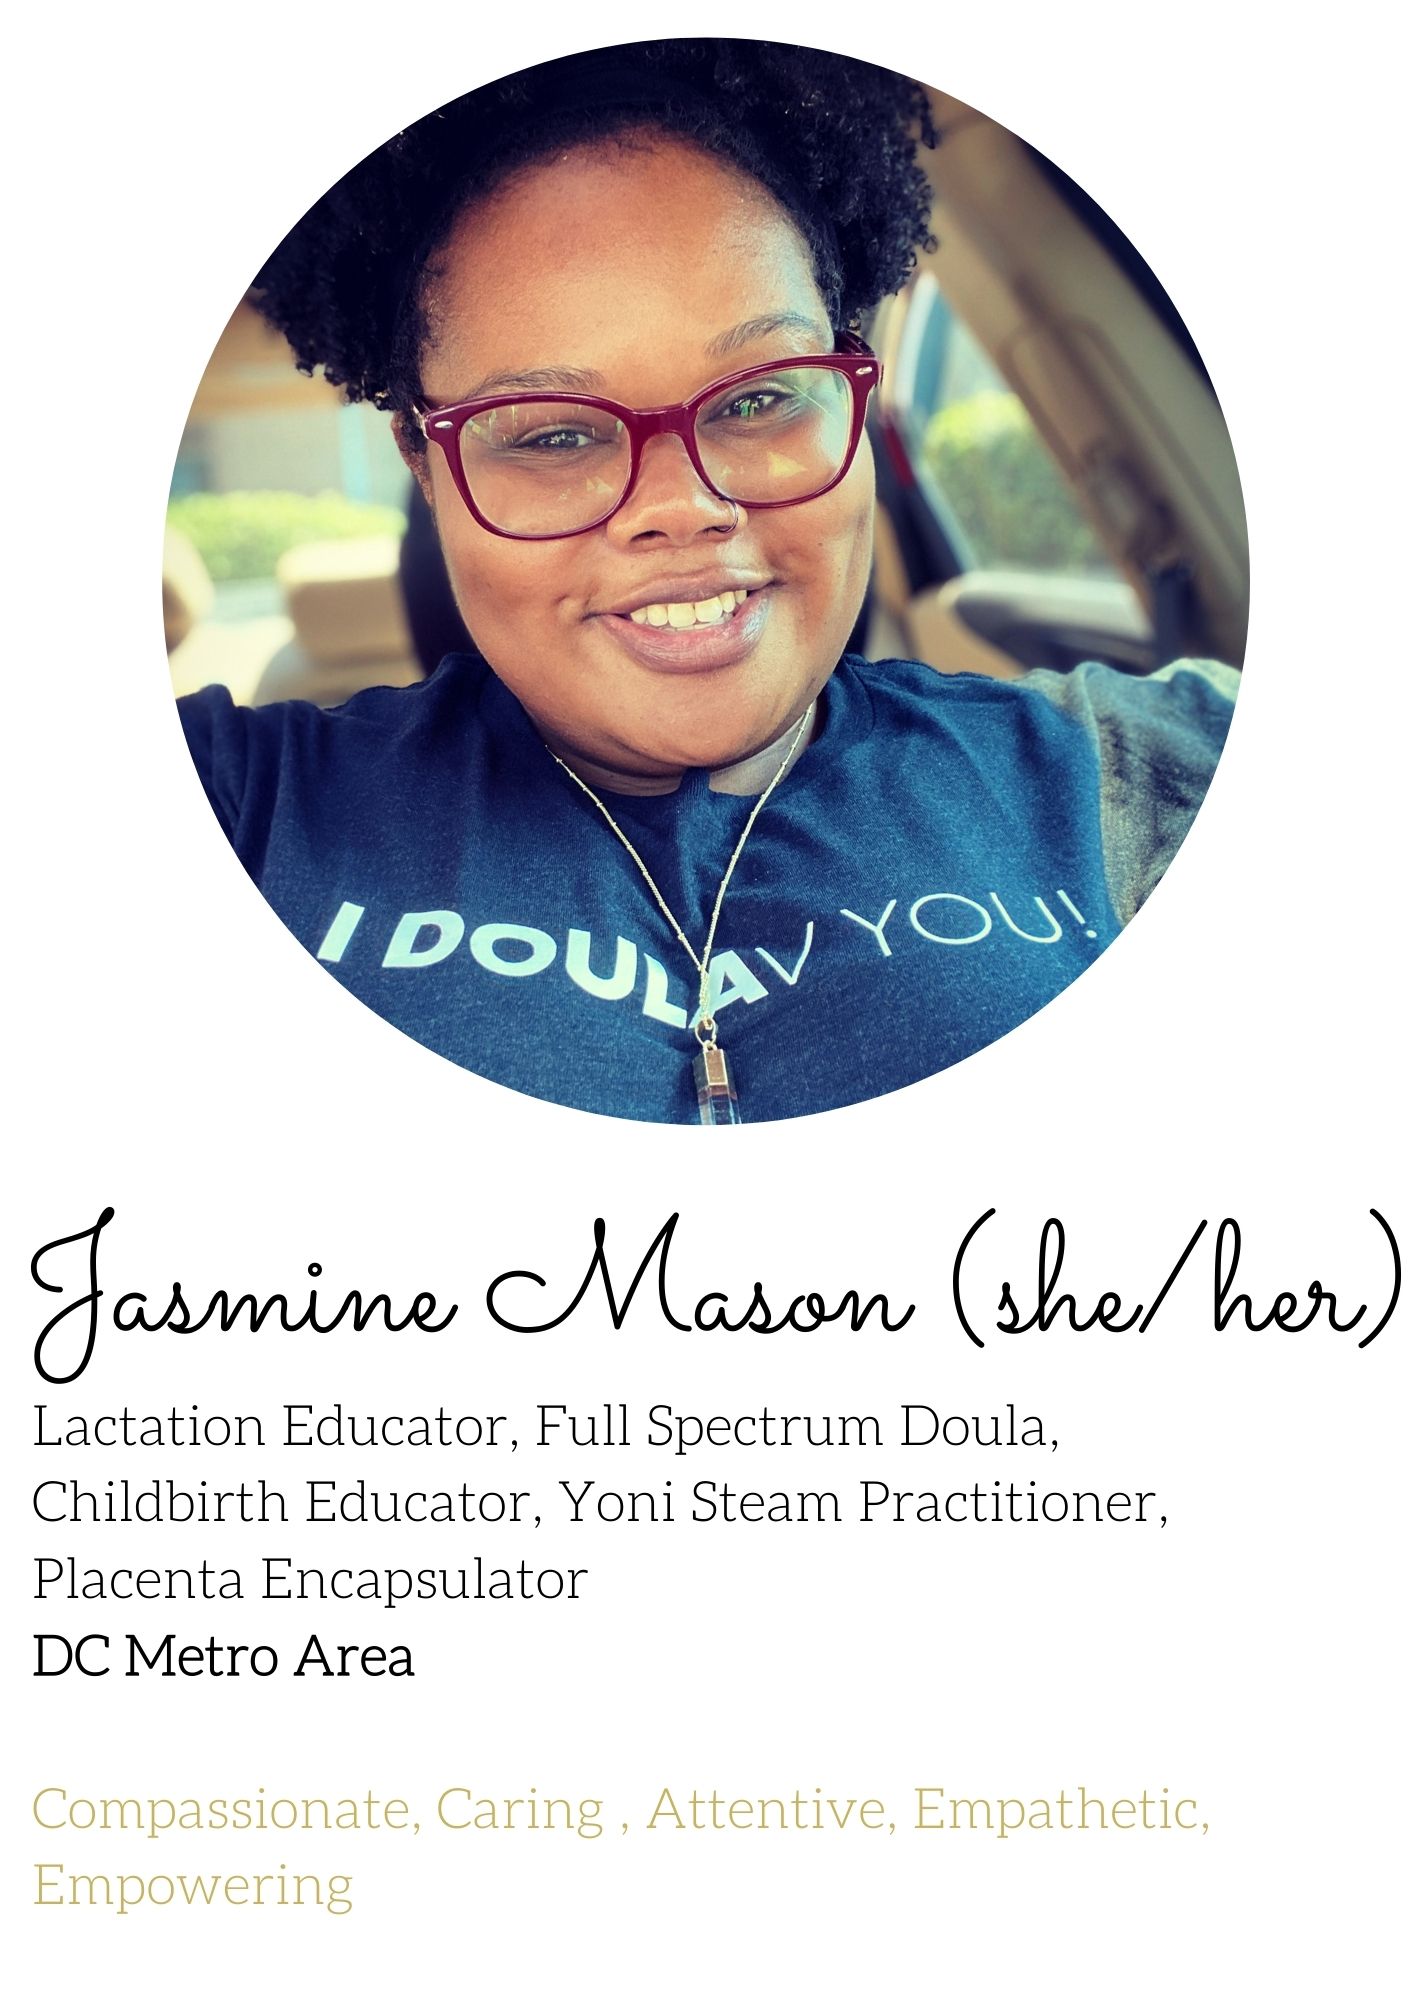 Jasmine Mason she/her lactation educator, full spectrum doula, childbirth educator, yoni steam practitioner, placenta encapsulator dc metro area, compassionate, caring, attentive, empathetic, empowering